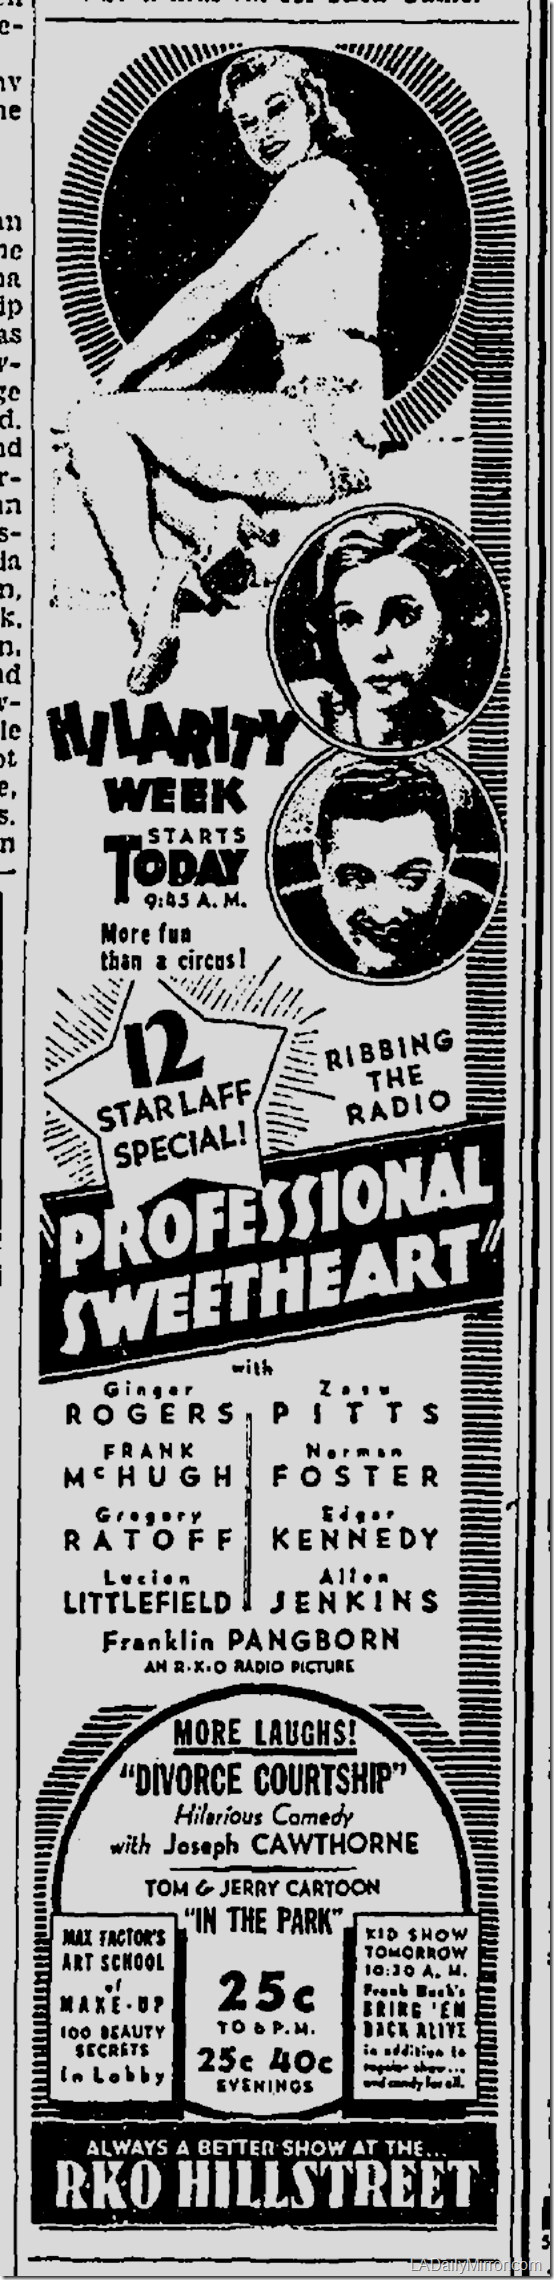 July 28, 1933, Professional Sweetheart